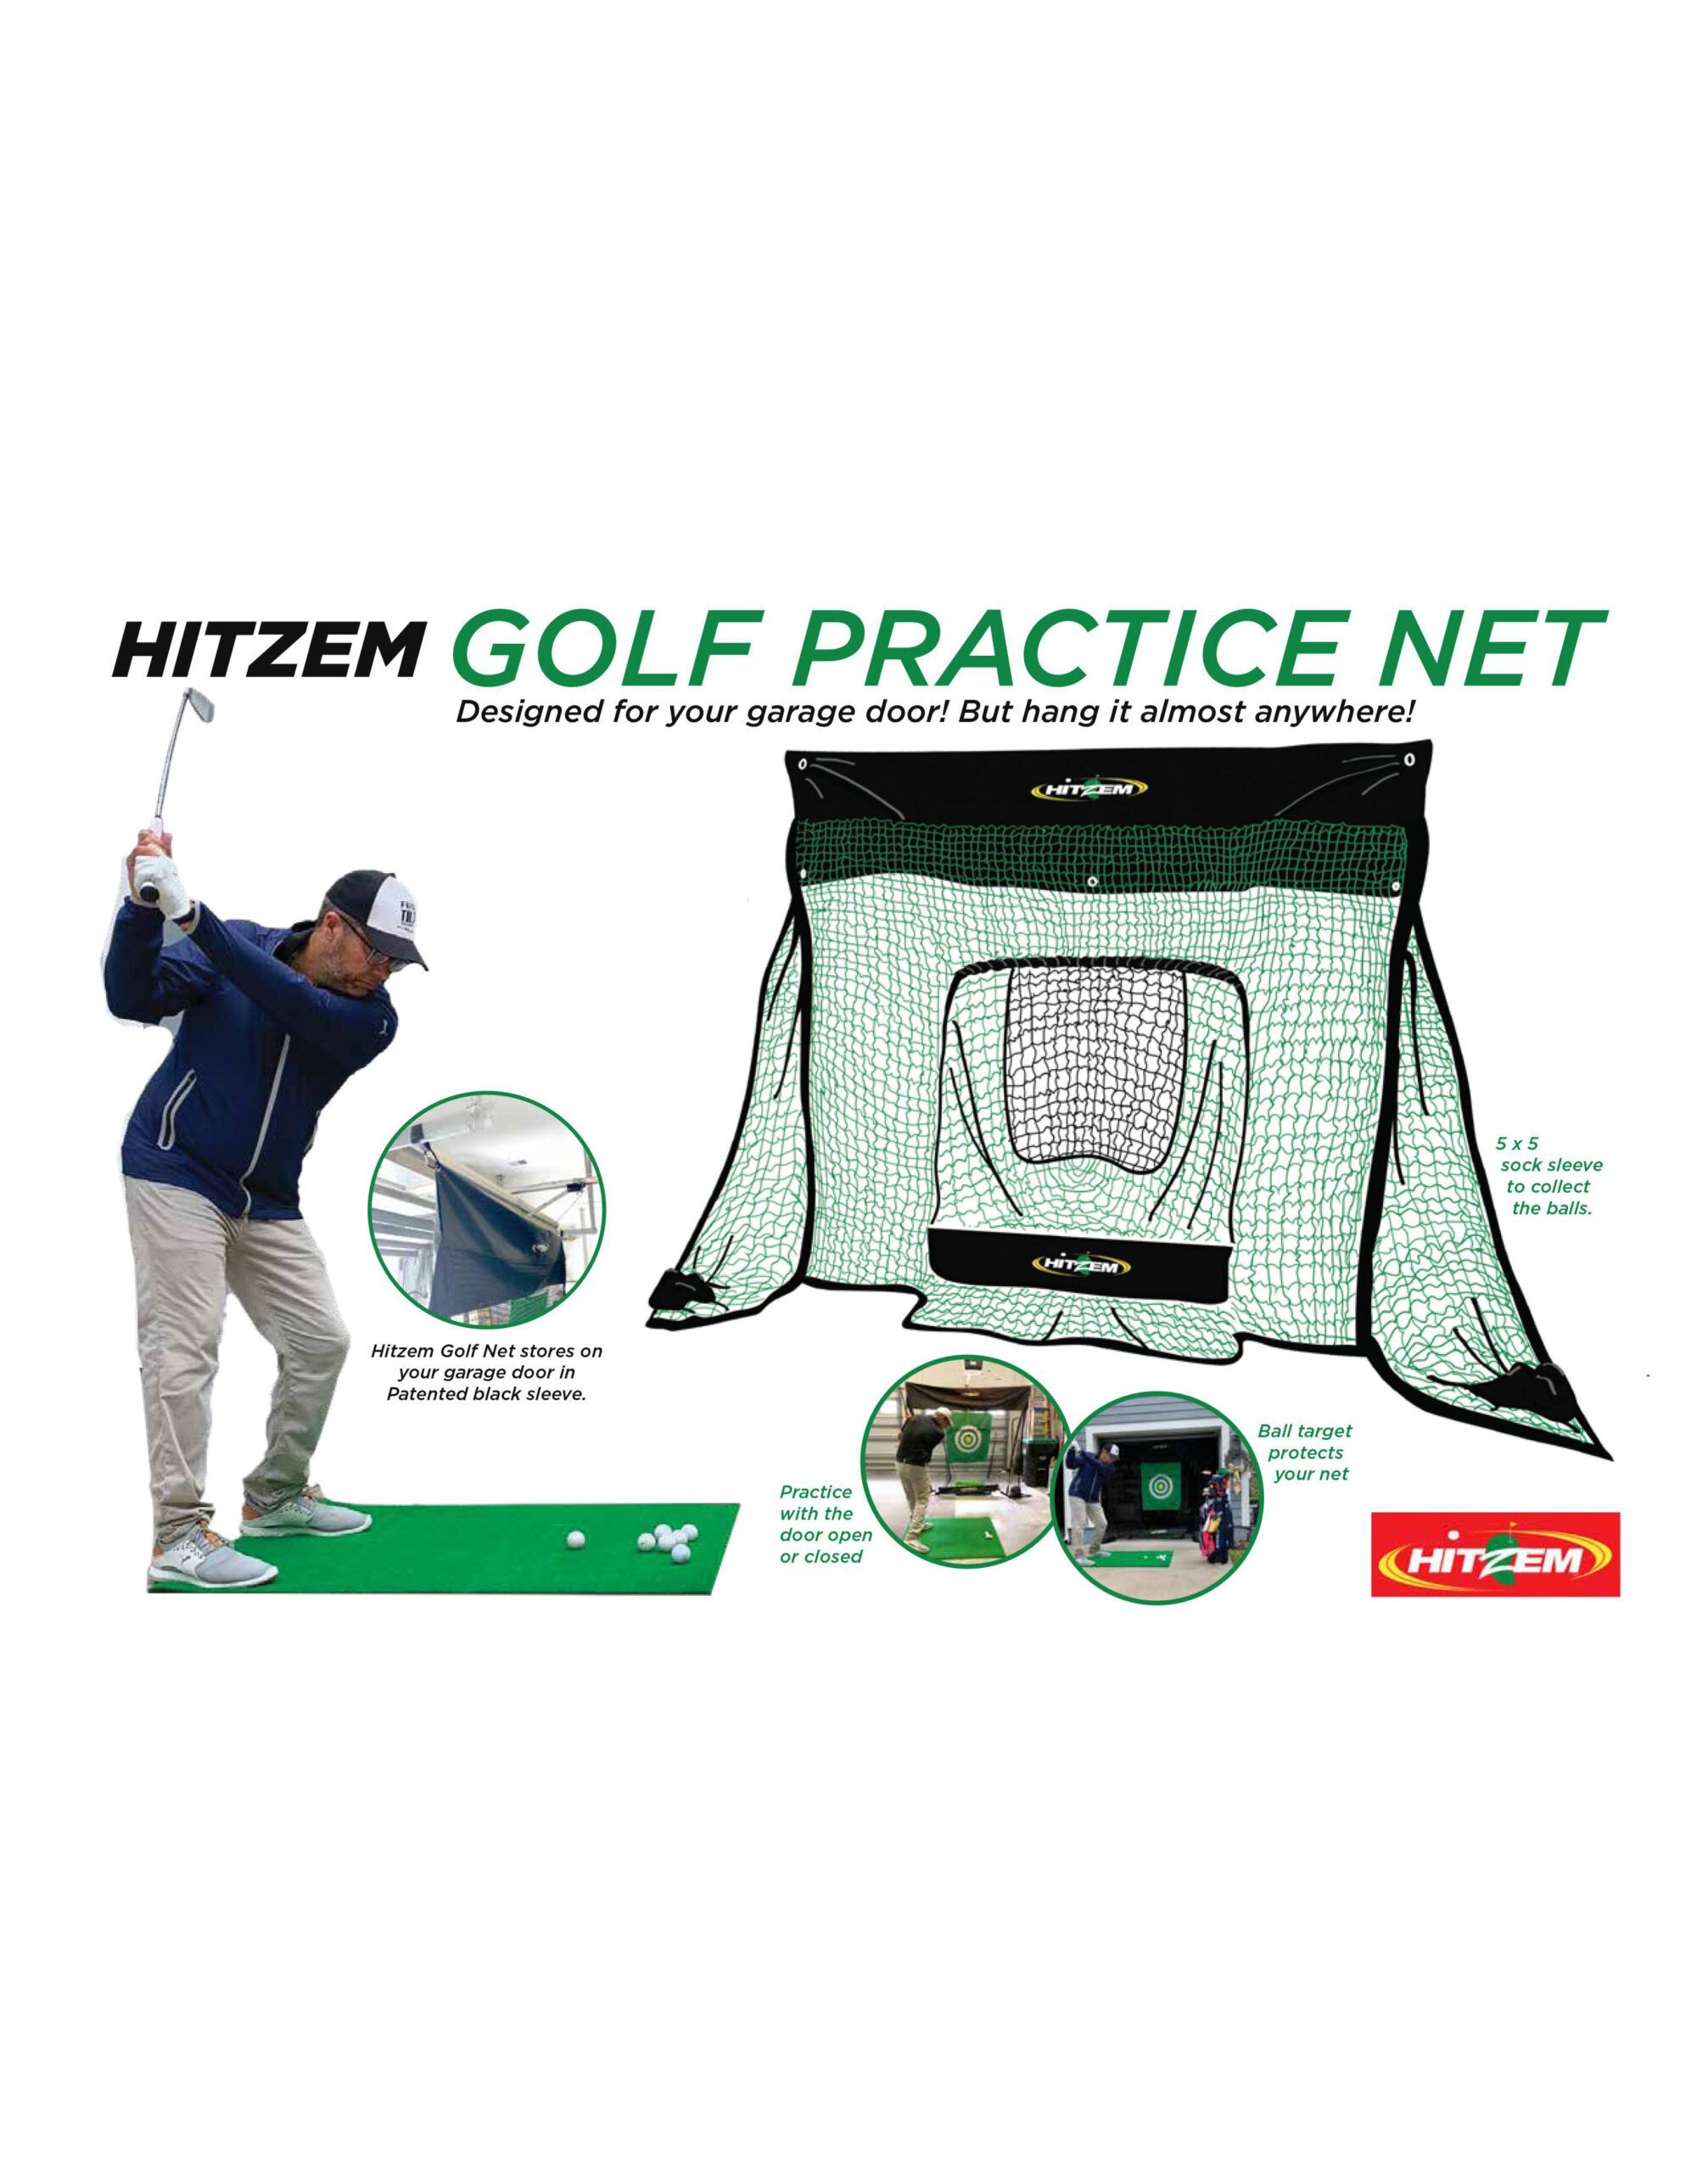 Hitzem Golf Practice Net Package Image